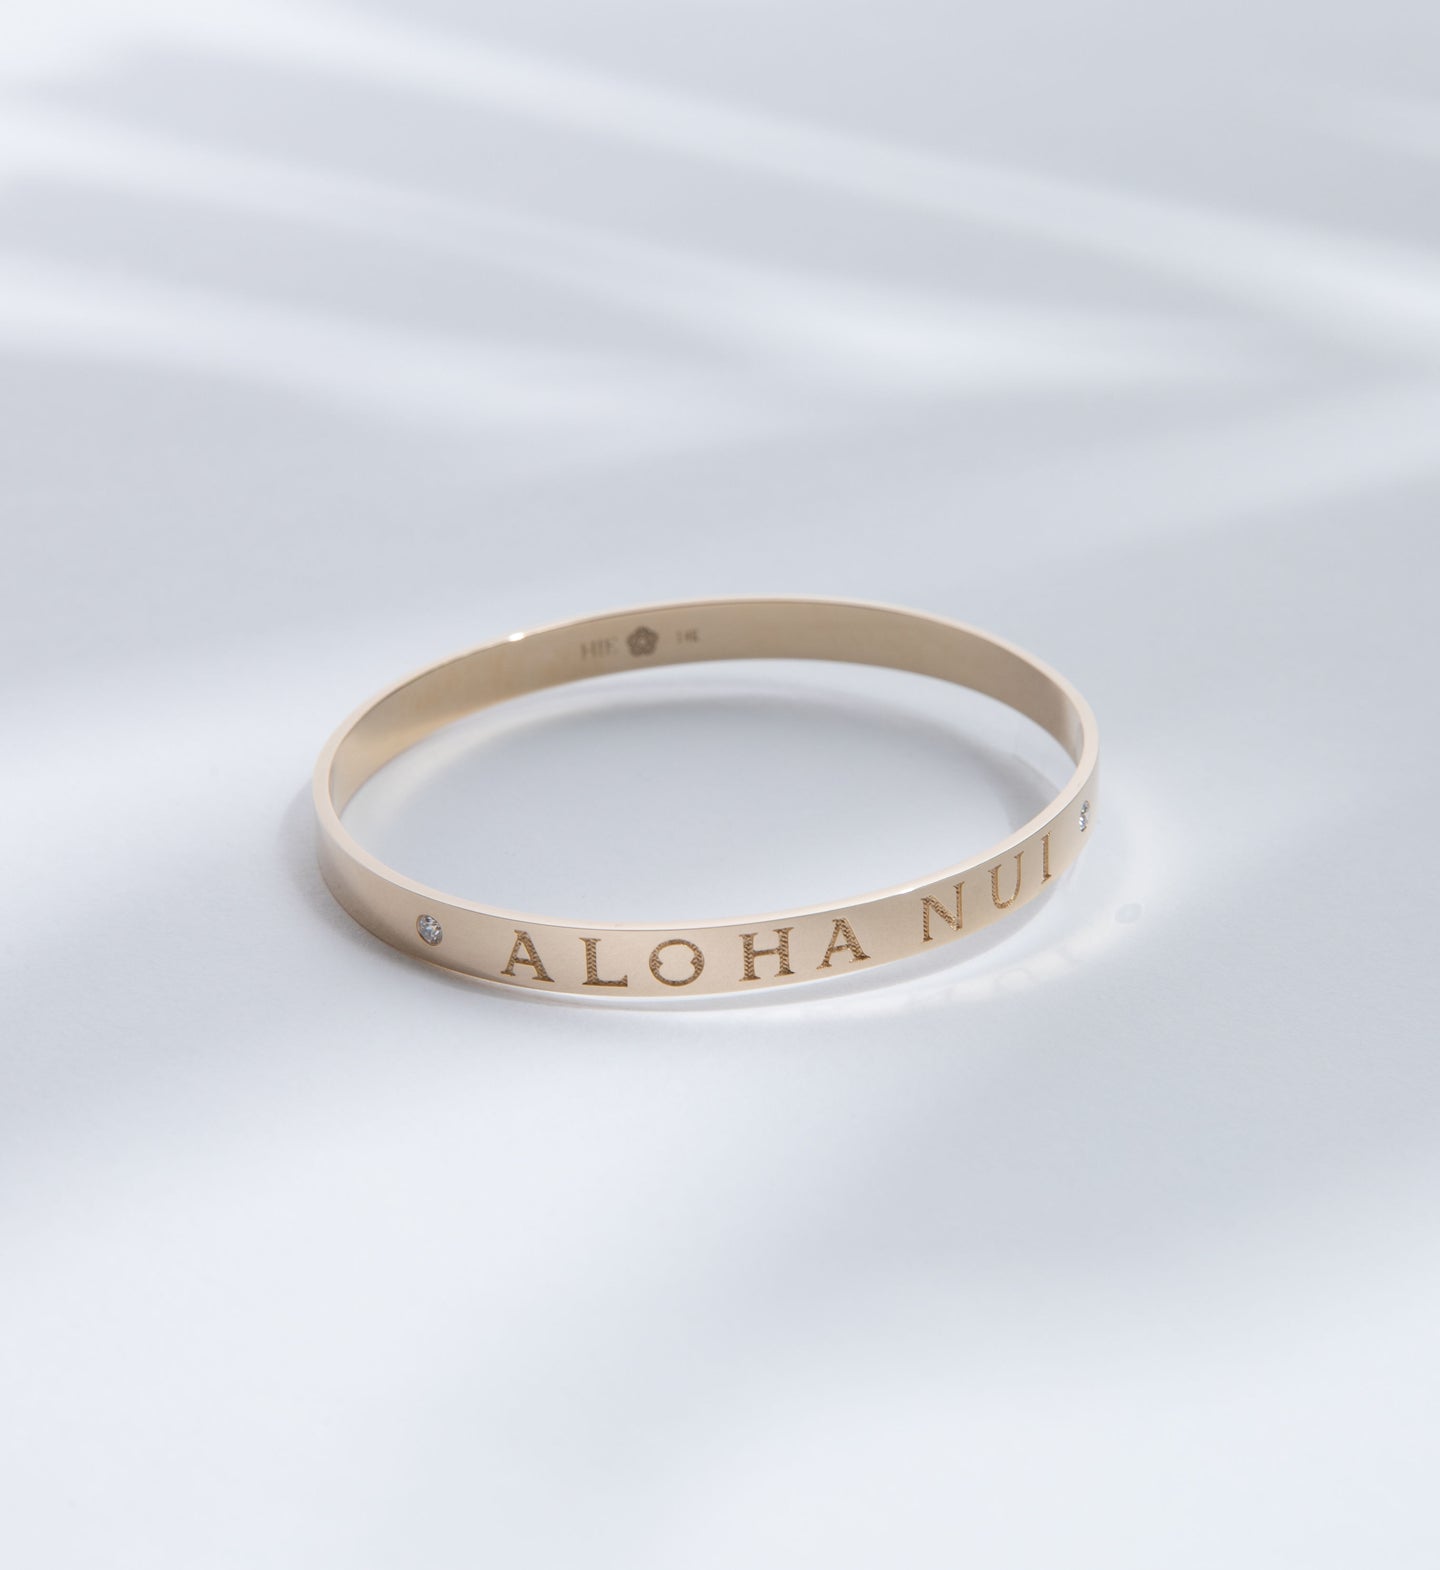 Hie Aloha Nui bangle bracelet in gold with subtle palm leaf shadow